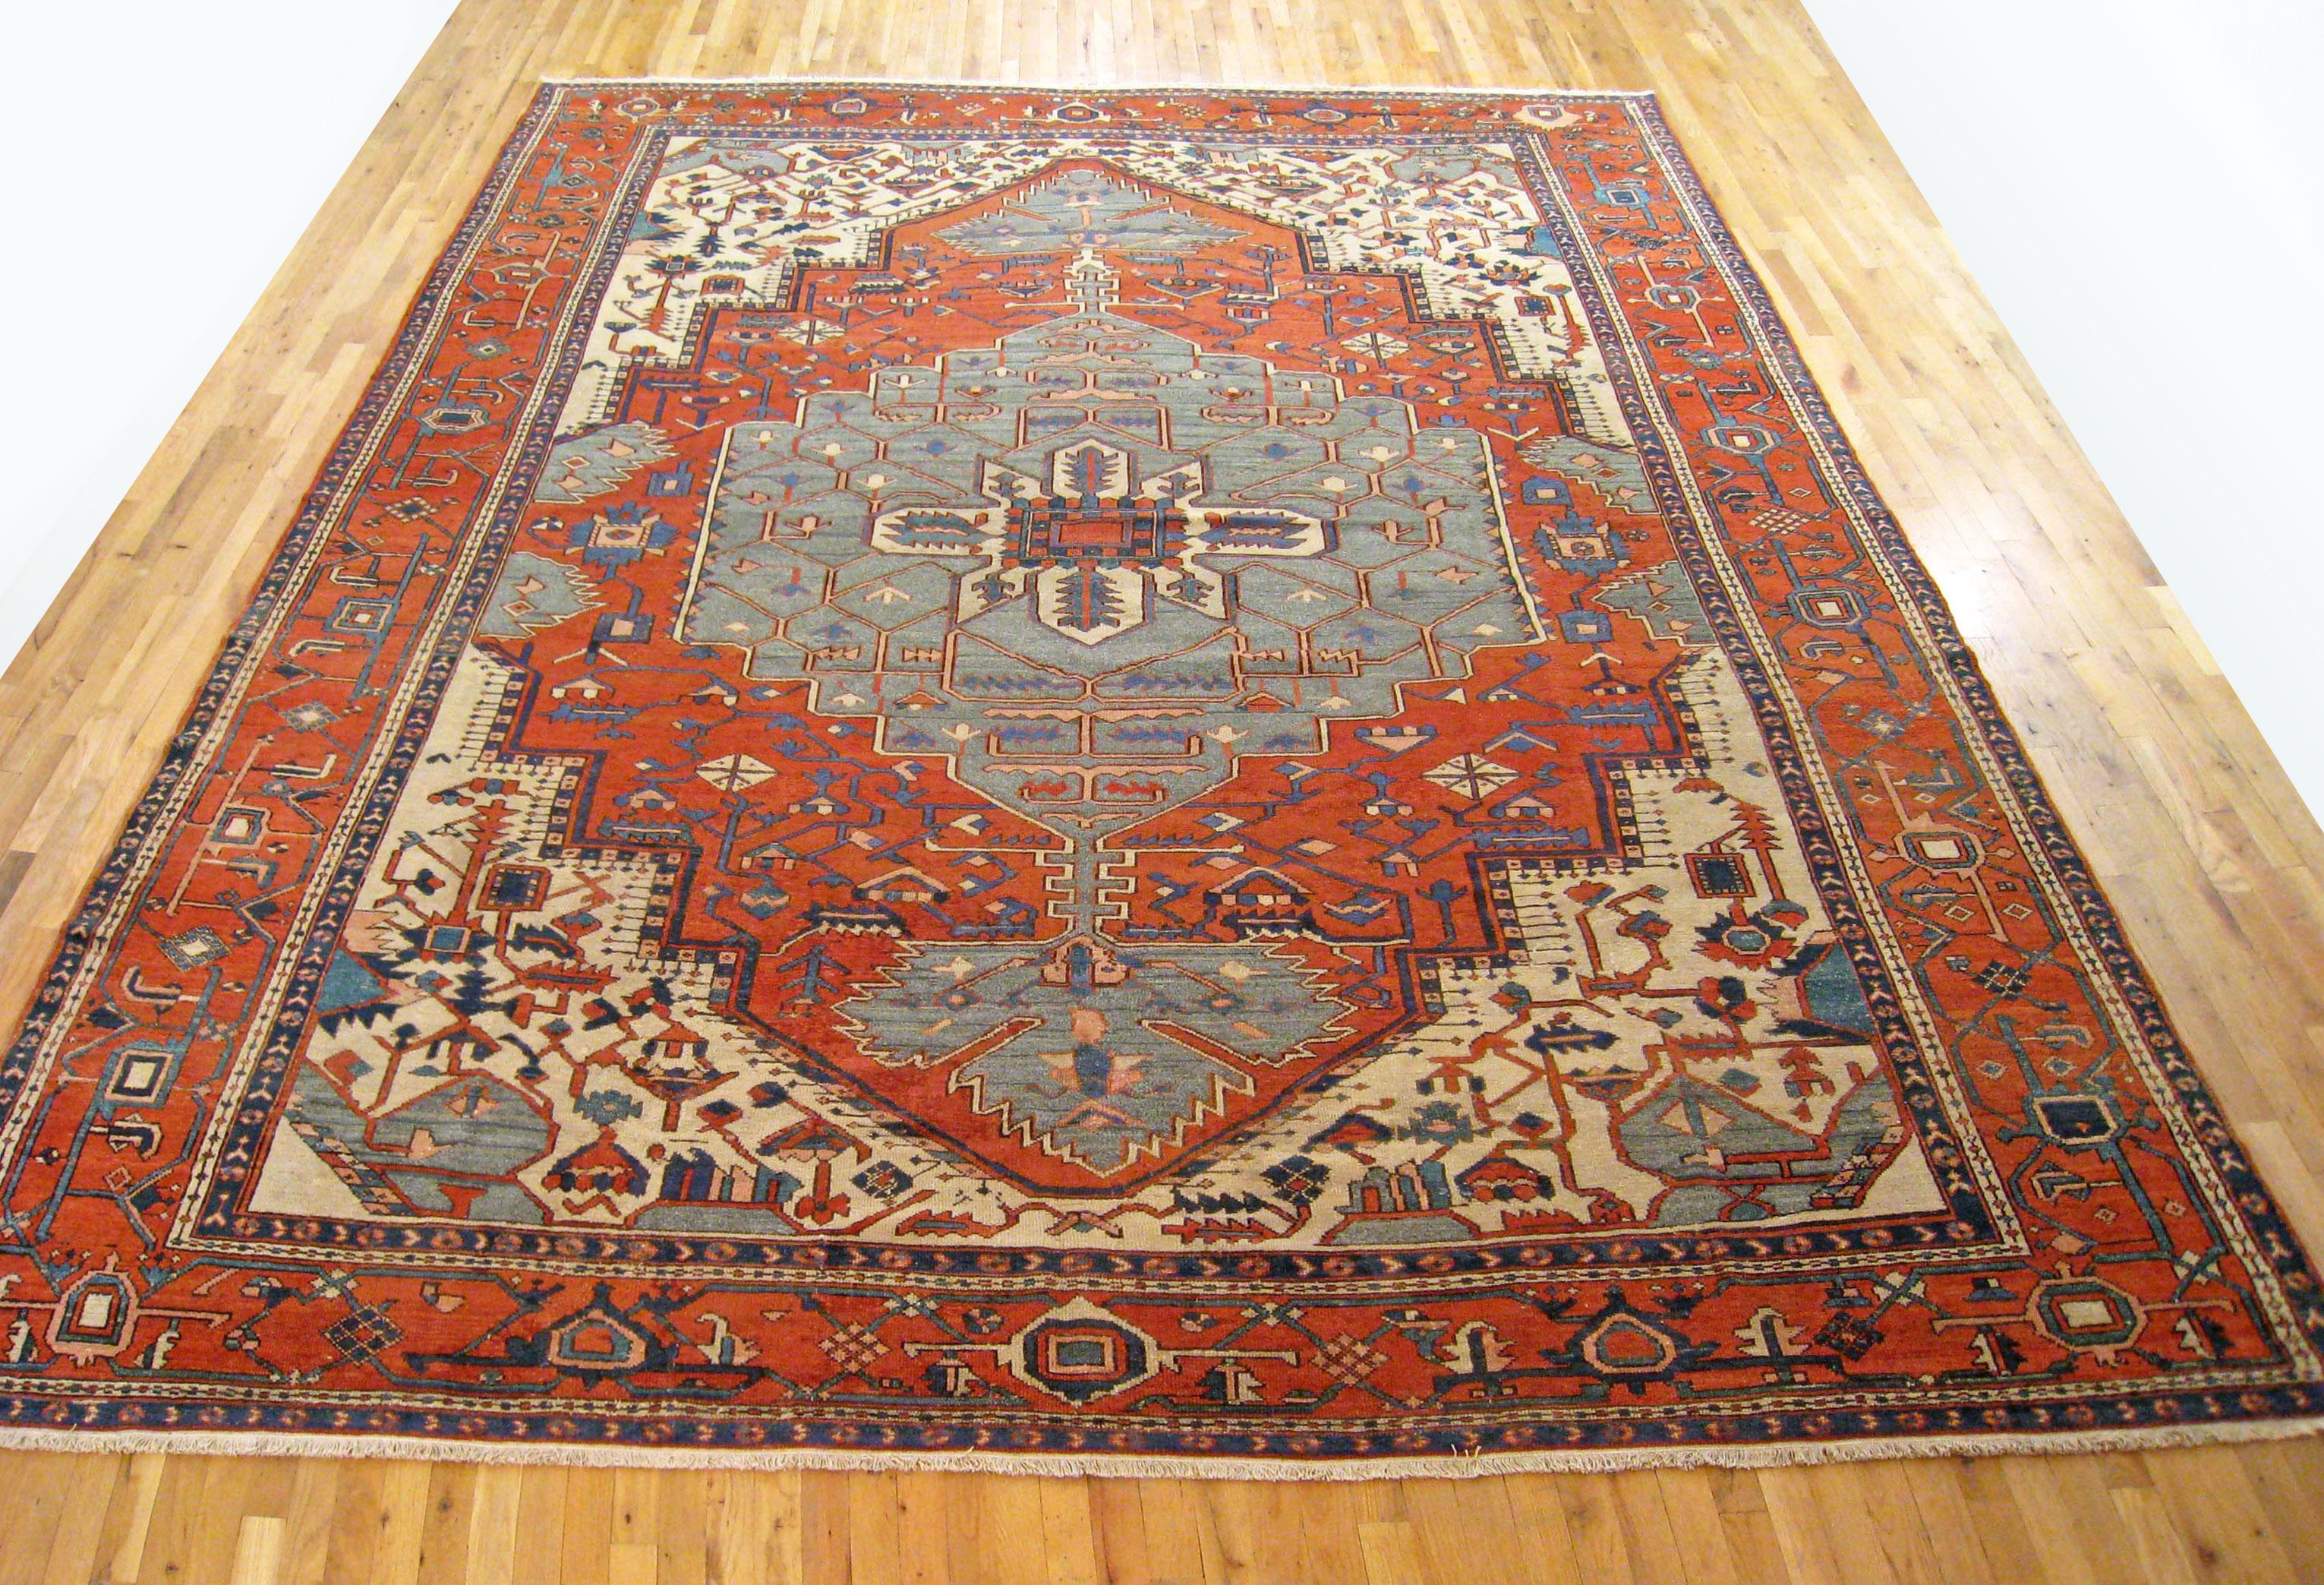 Antique Persian Serapi oriental rug, in large size

An antique Persian Serapi oriental rug, size 13'5